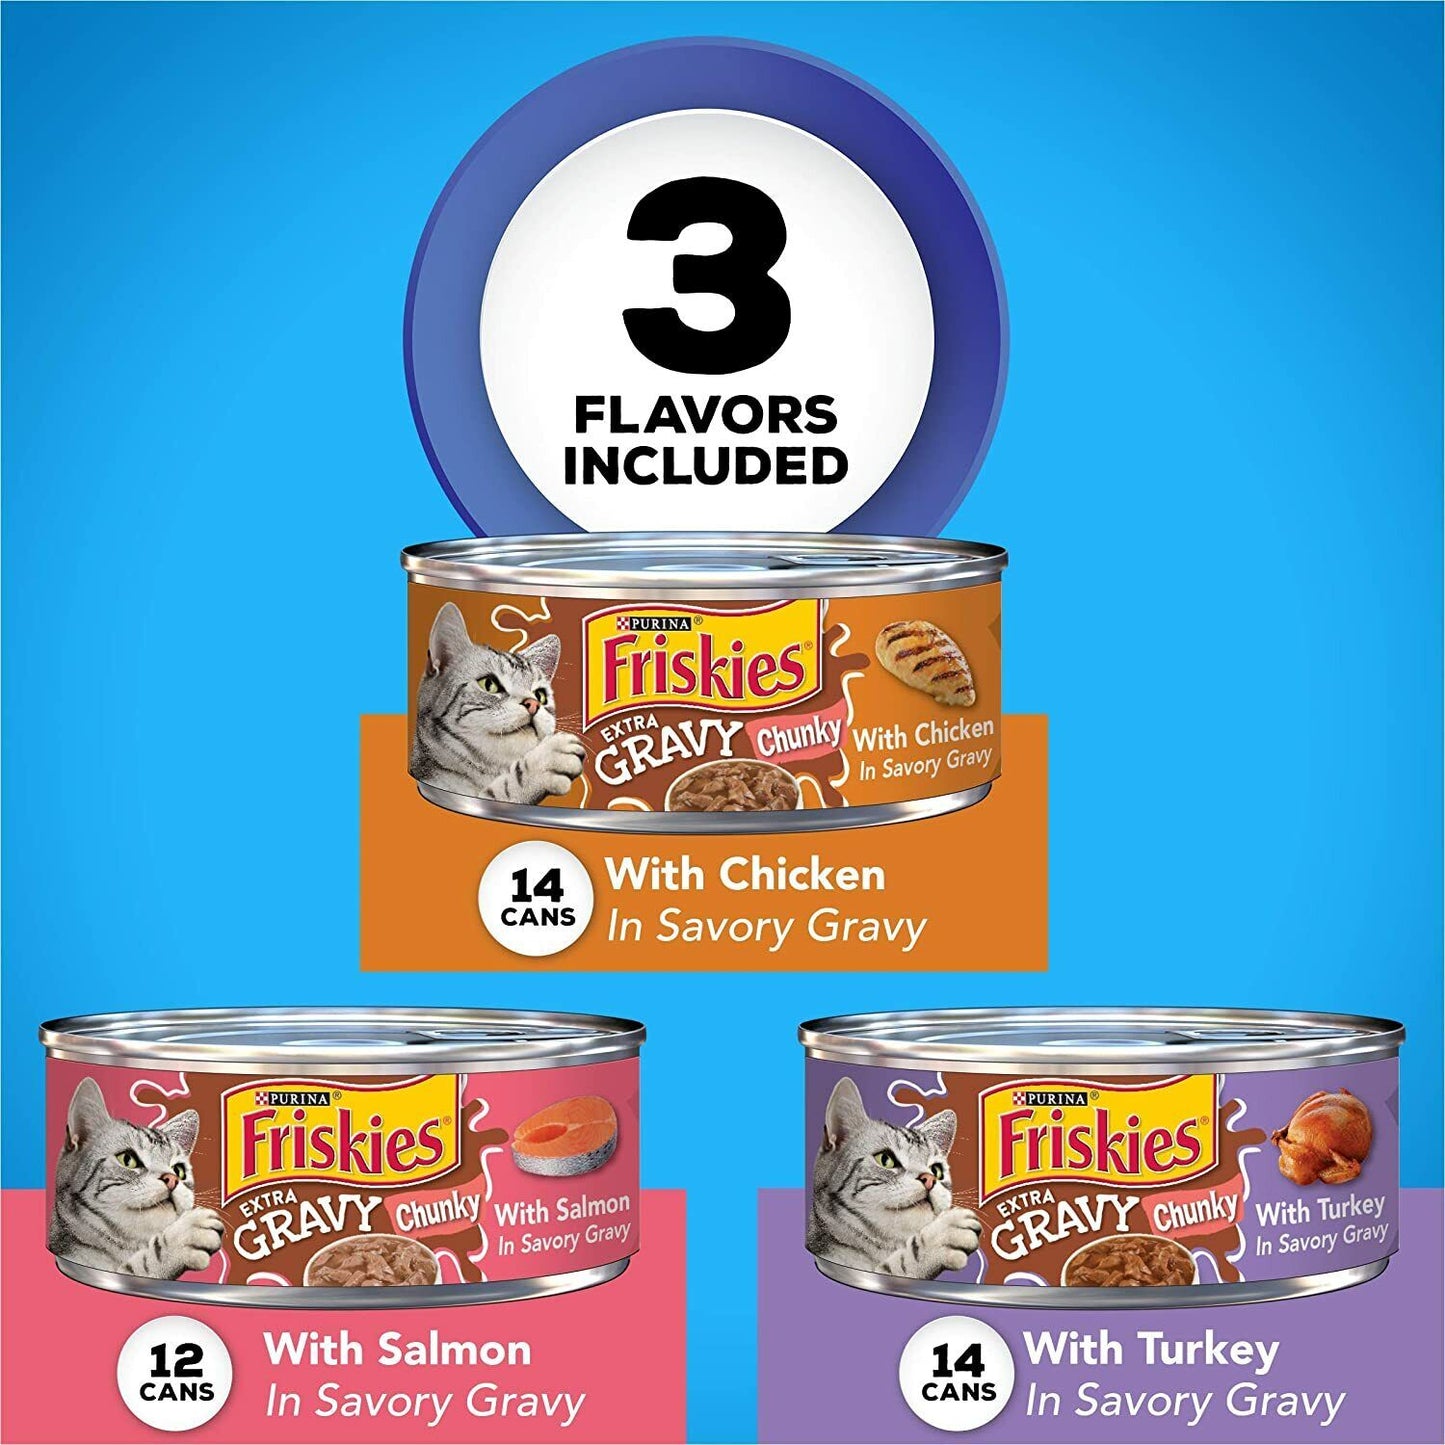 Friskies Extra Gravy Chunky Wet Cat Food Chicken Turkey Salmon 5.5 oz, 40 Cans